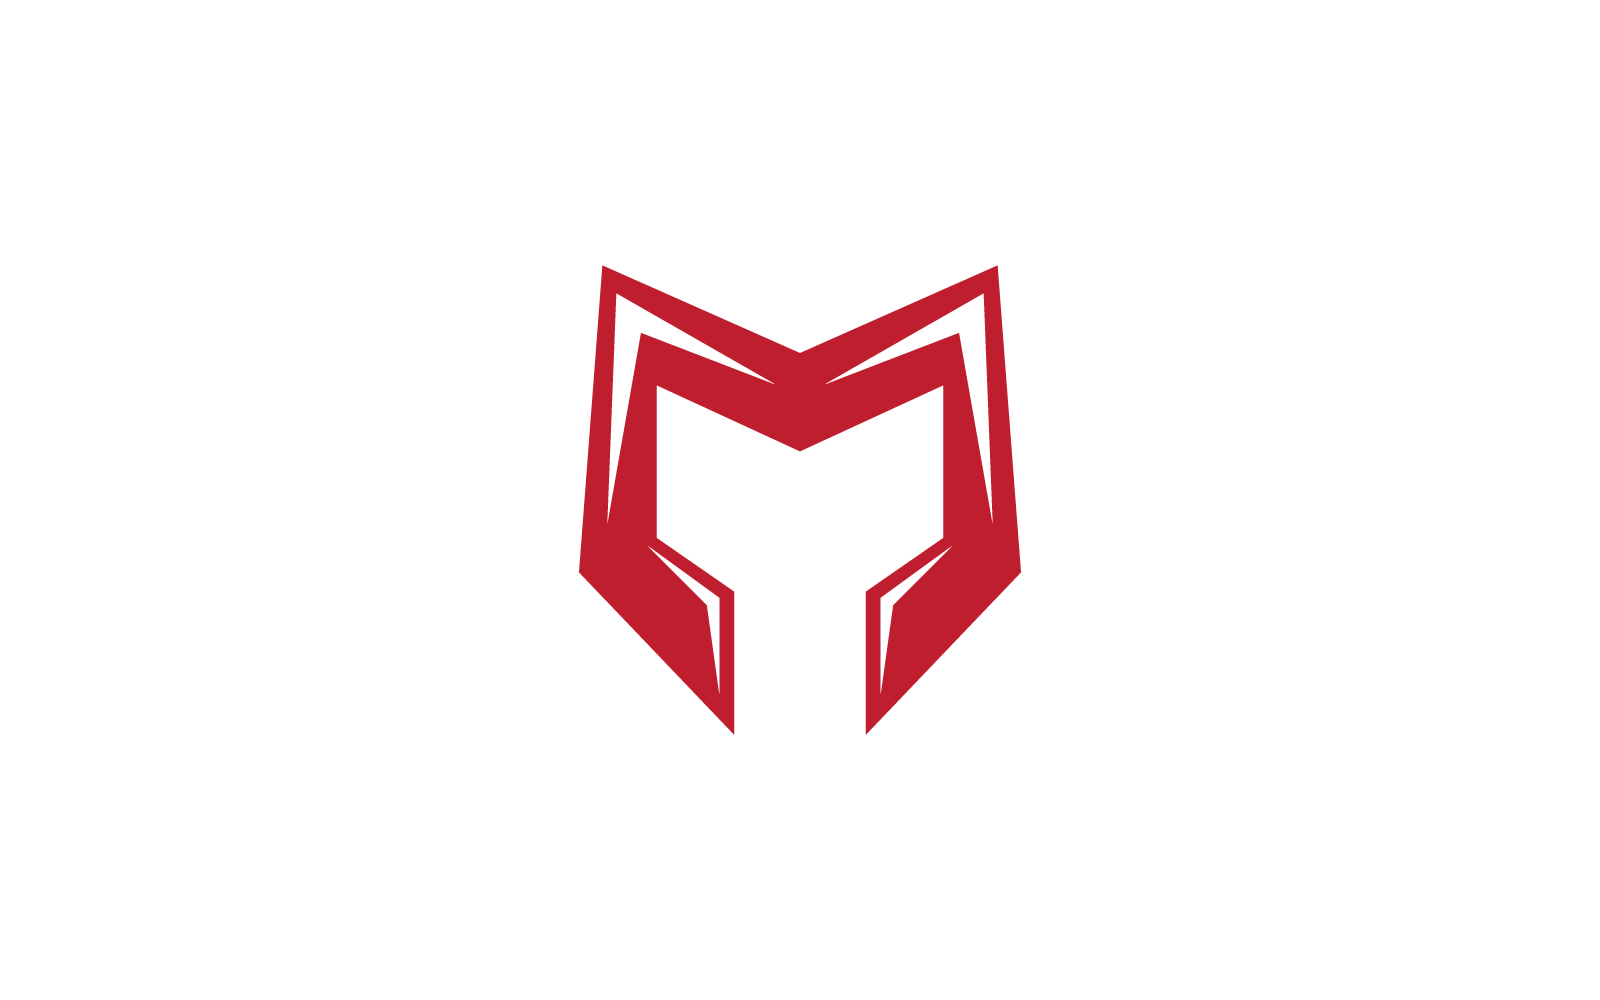 M Letter logo business template